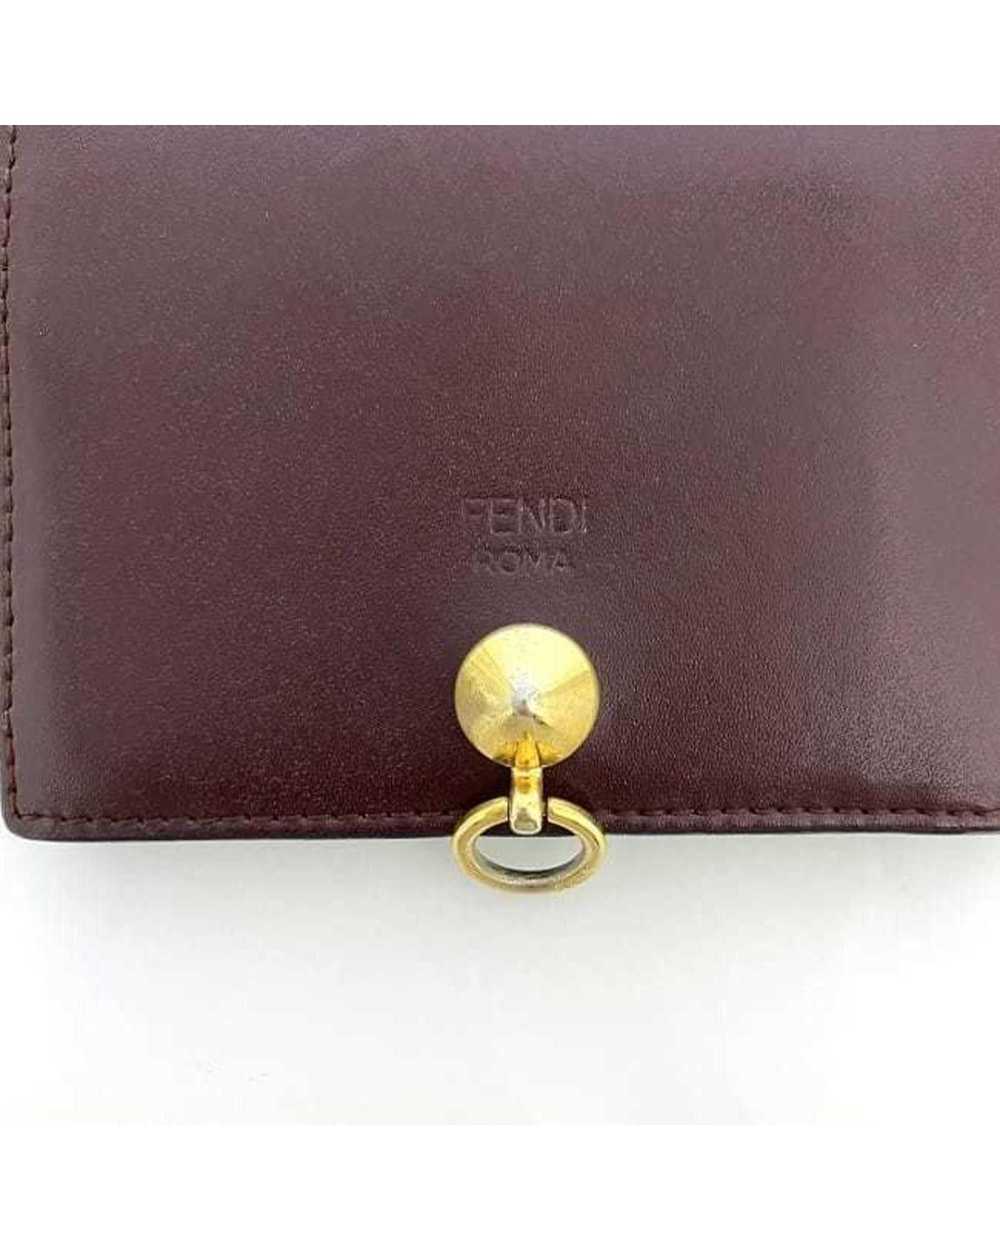 Fendi Burgundy Leather Compact Wallet - image 5